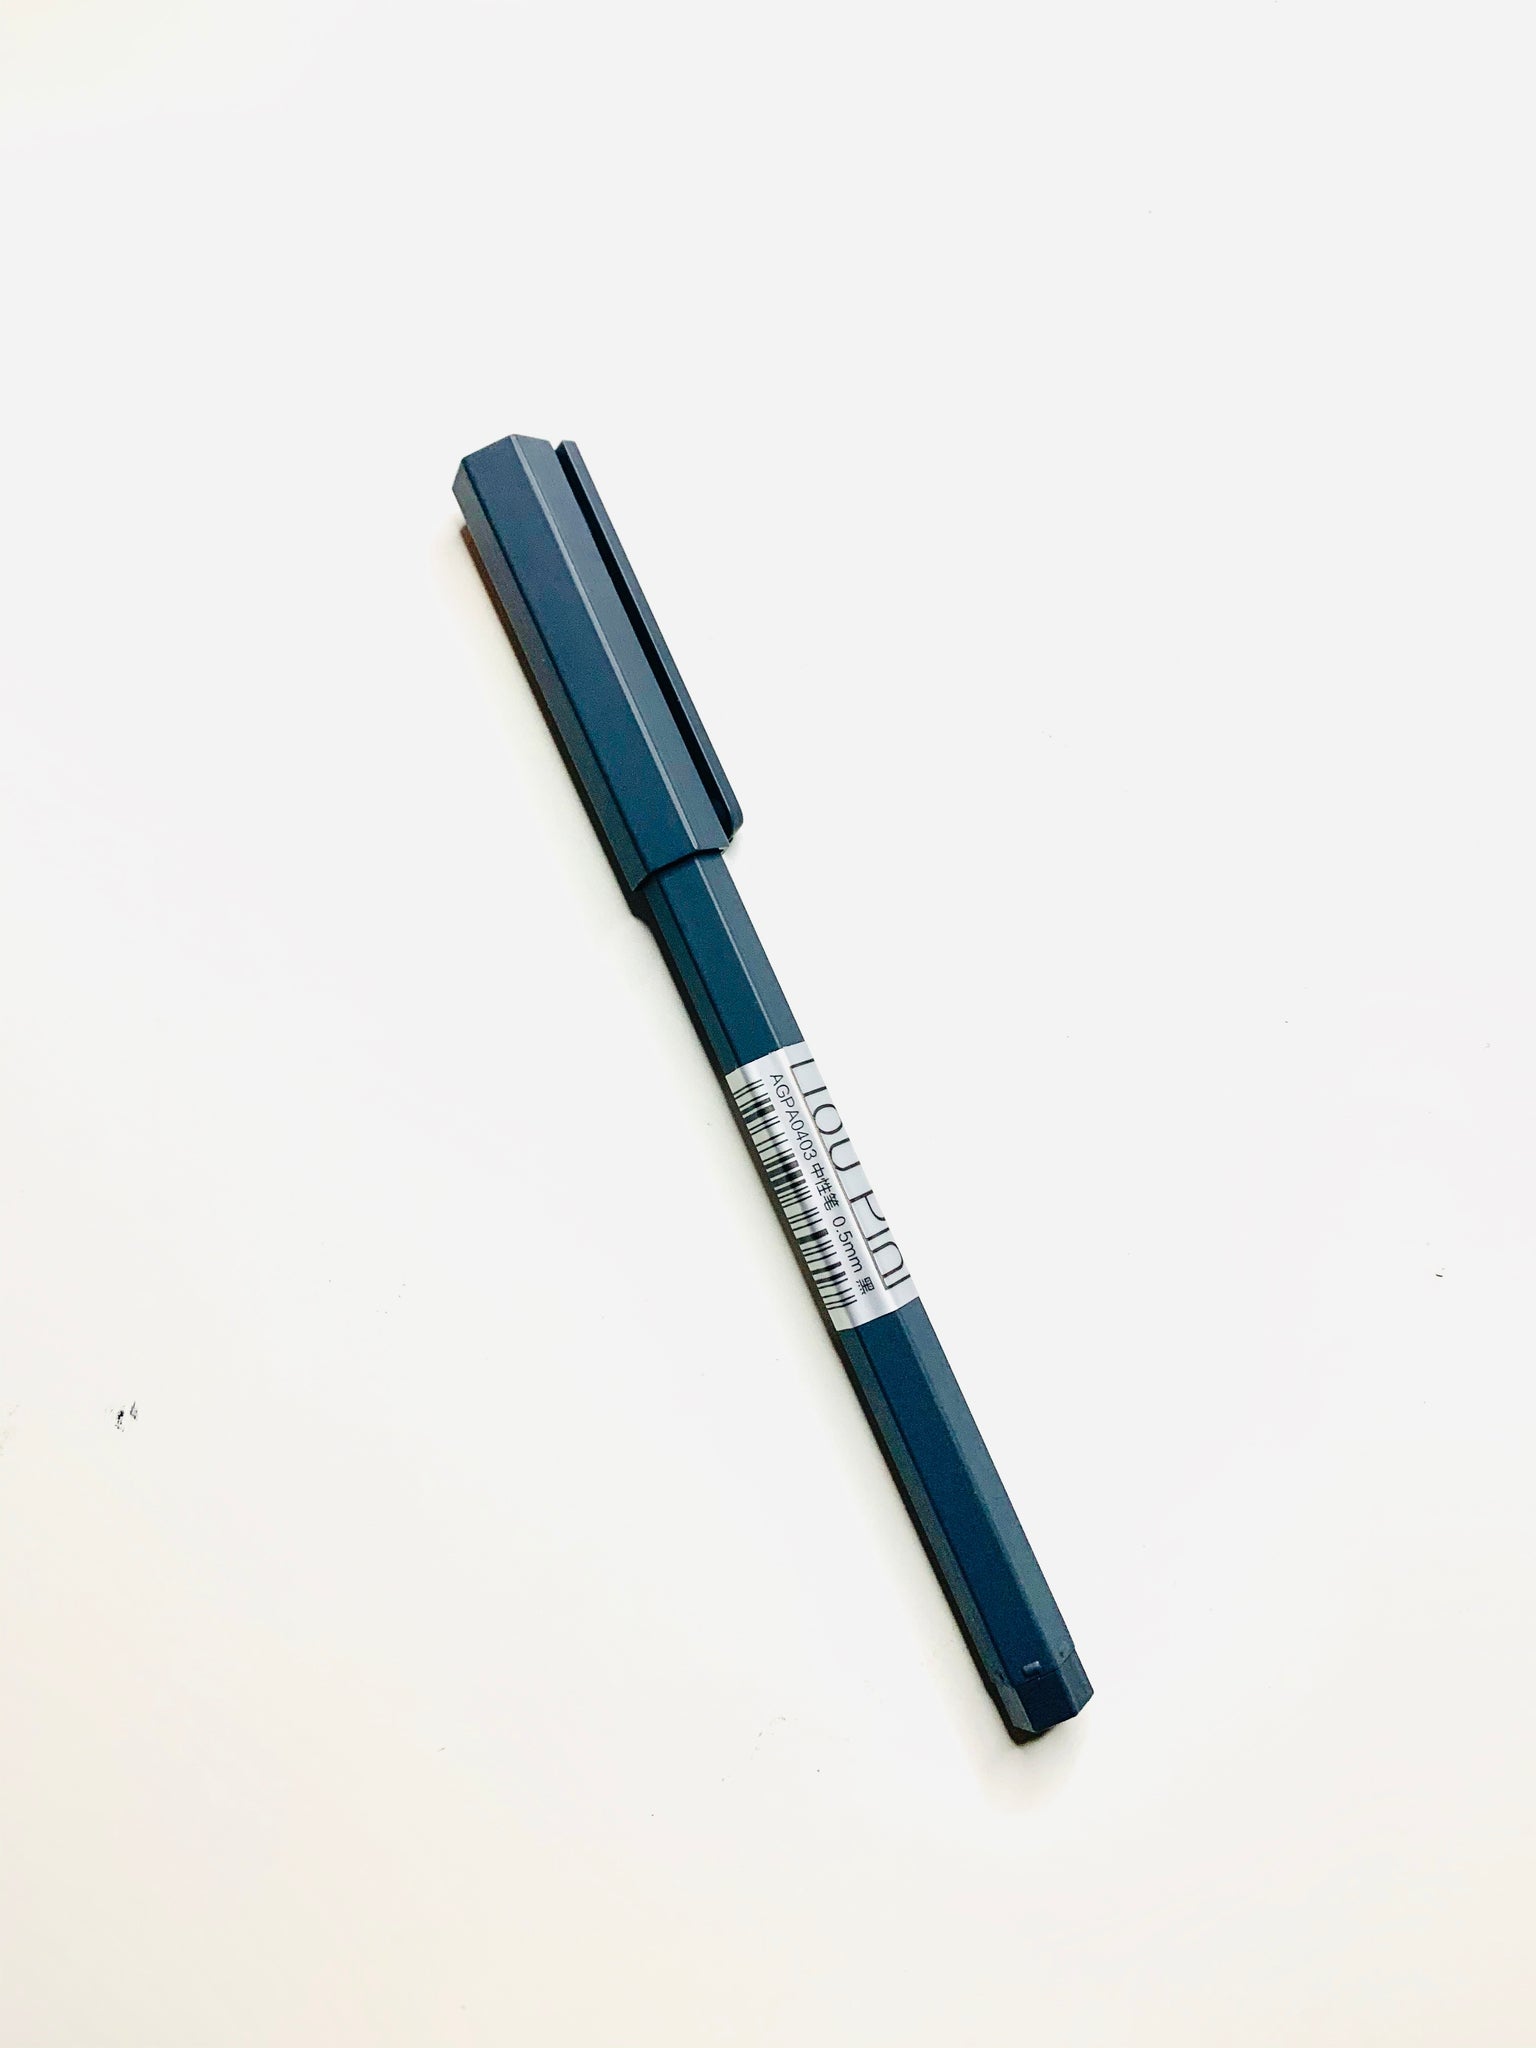 Buy M&G Hot Clean Erasable Gel Ink Pen Online on GEECR